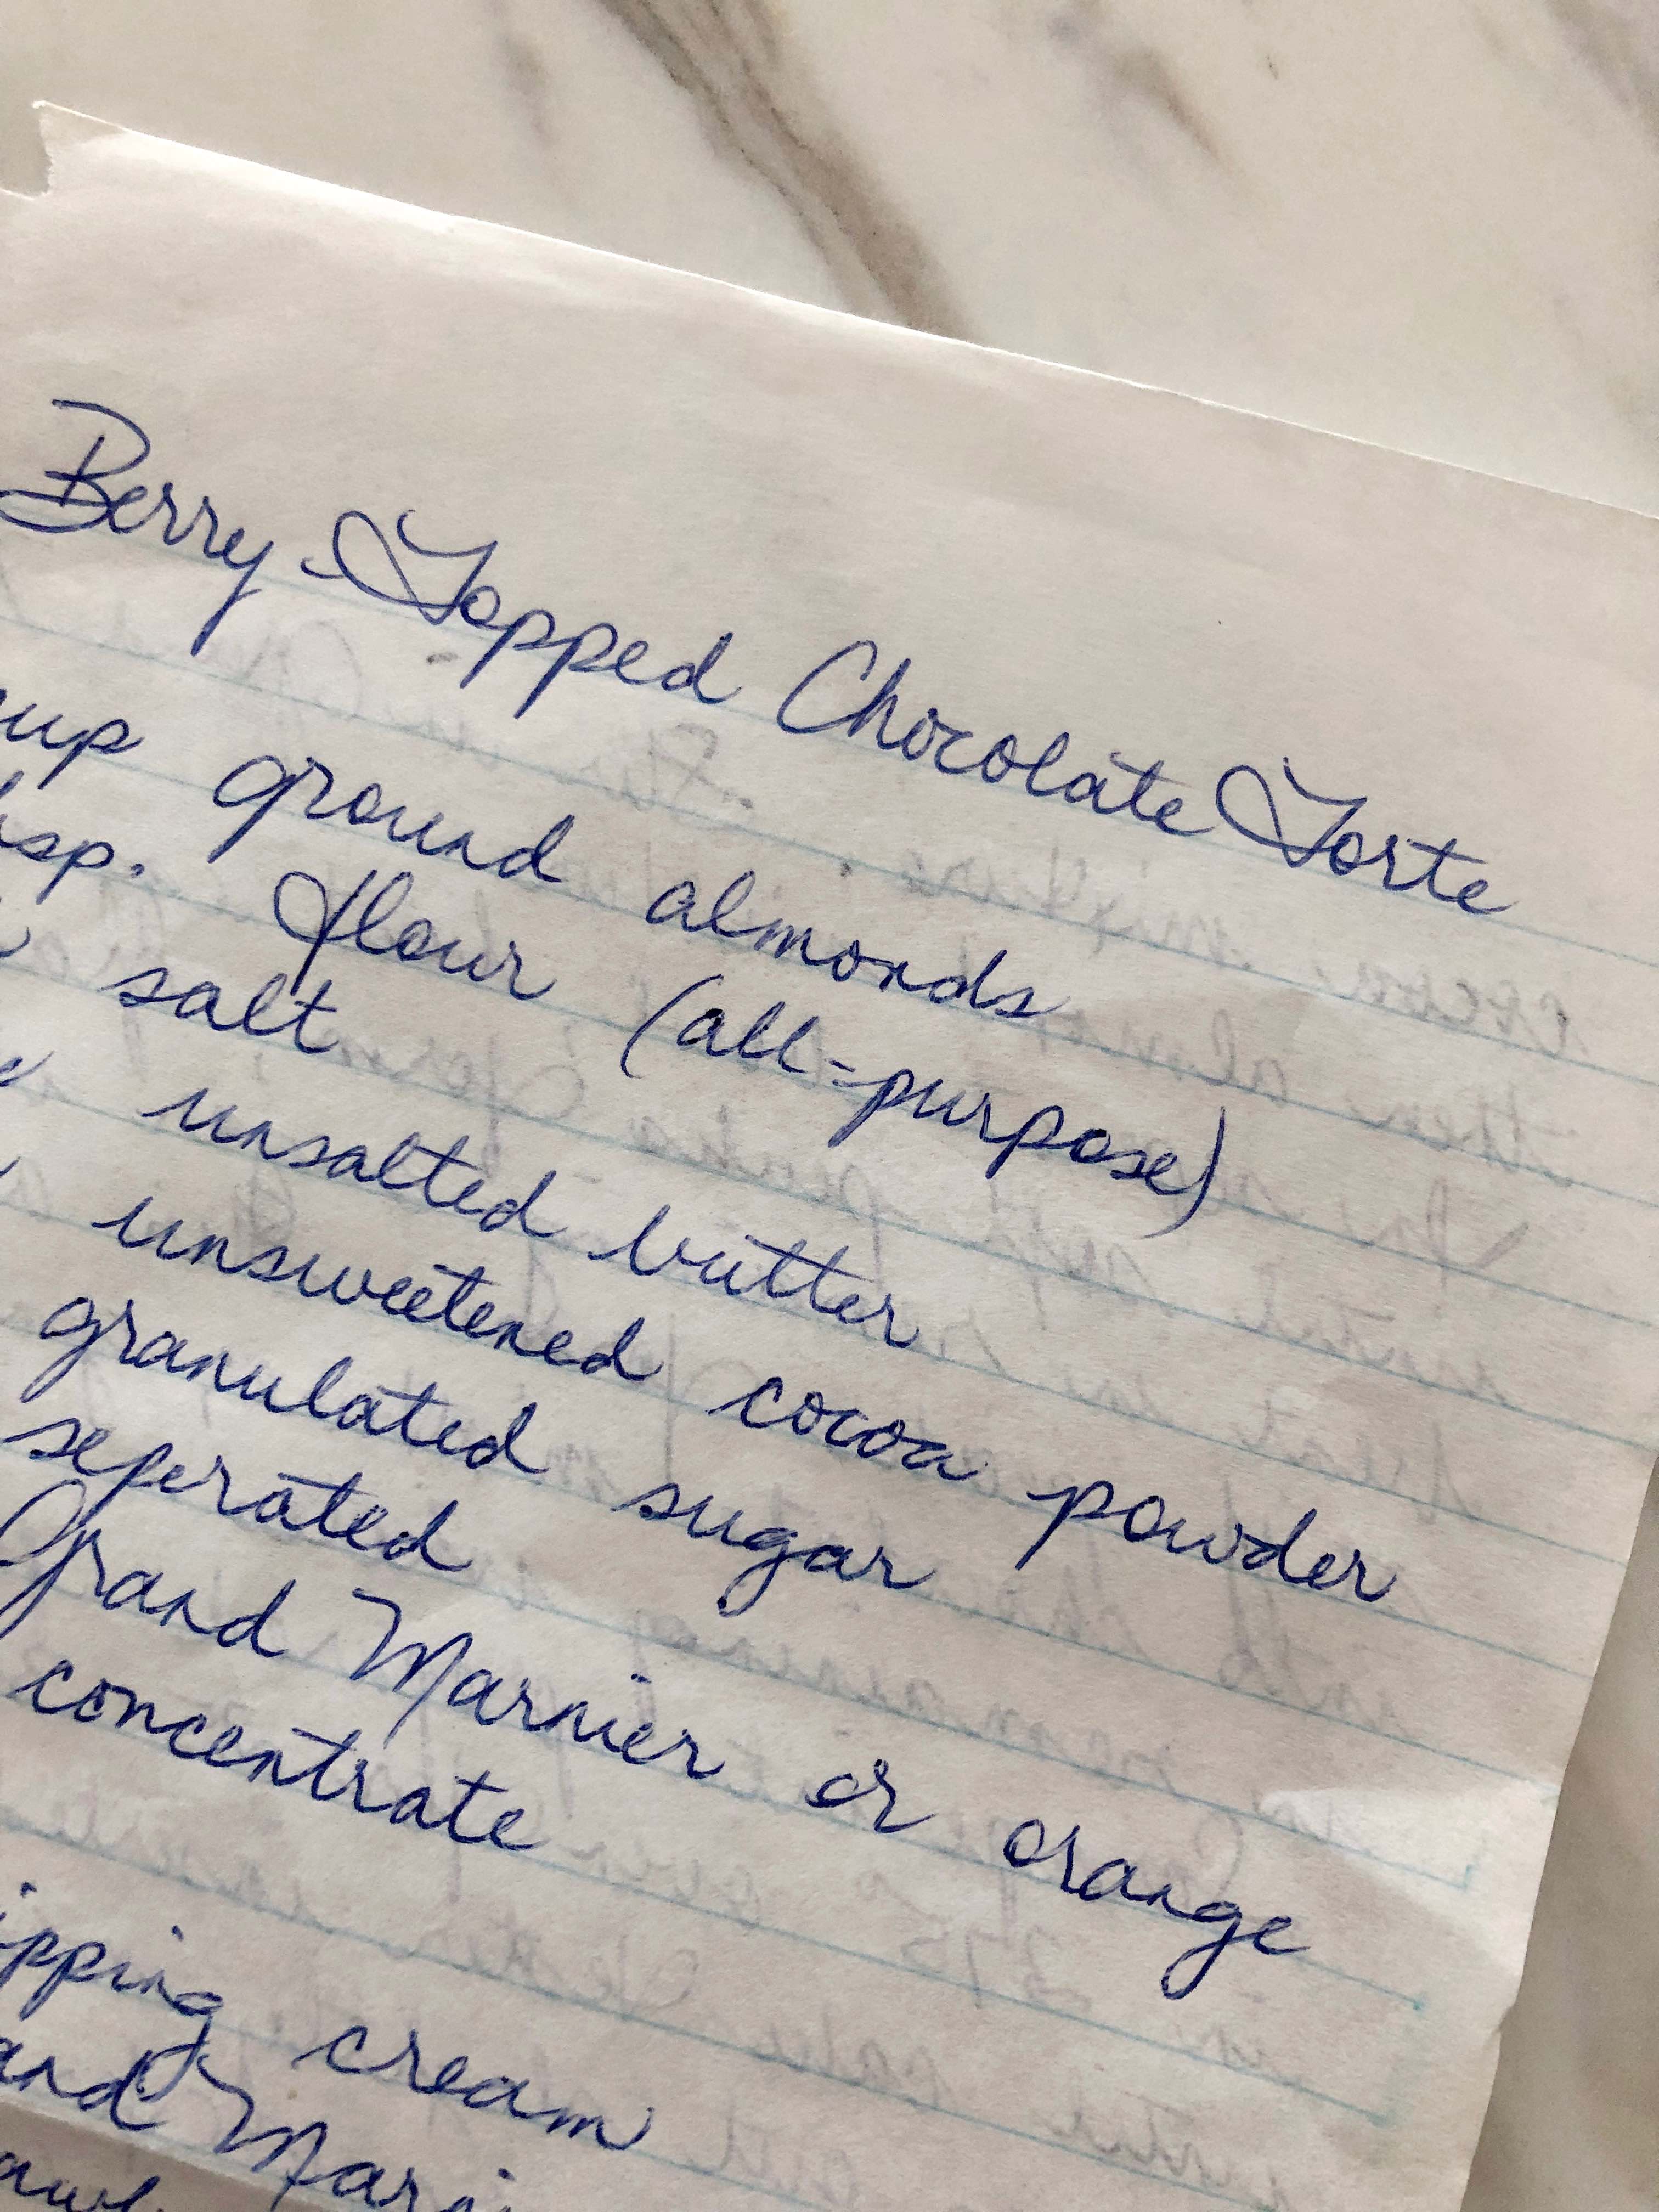 Strawberry Topped Chocolate Torte Recipe in Mom's Handwriting | Accidental Artisan